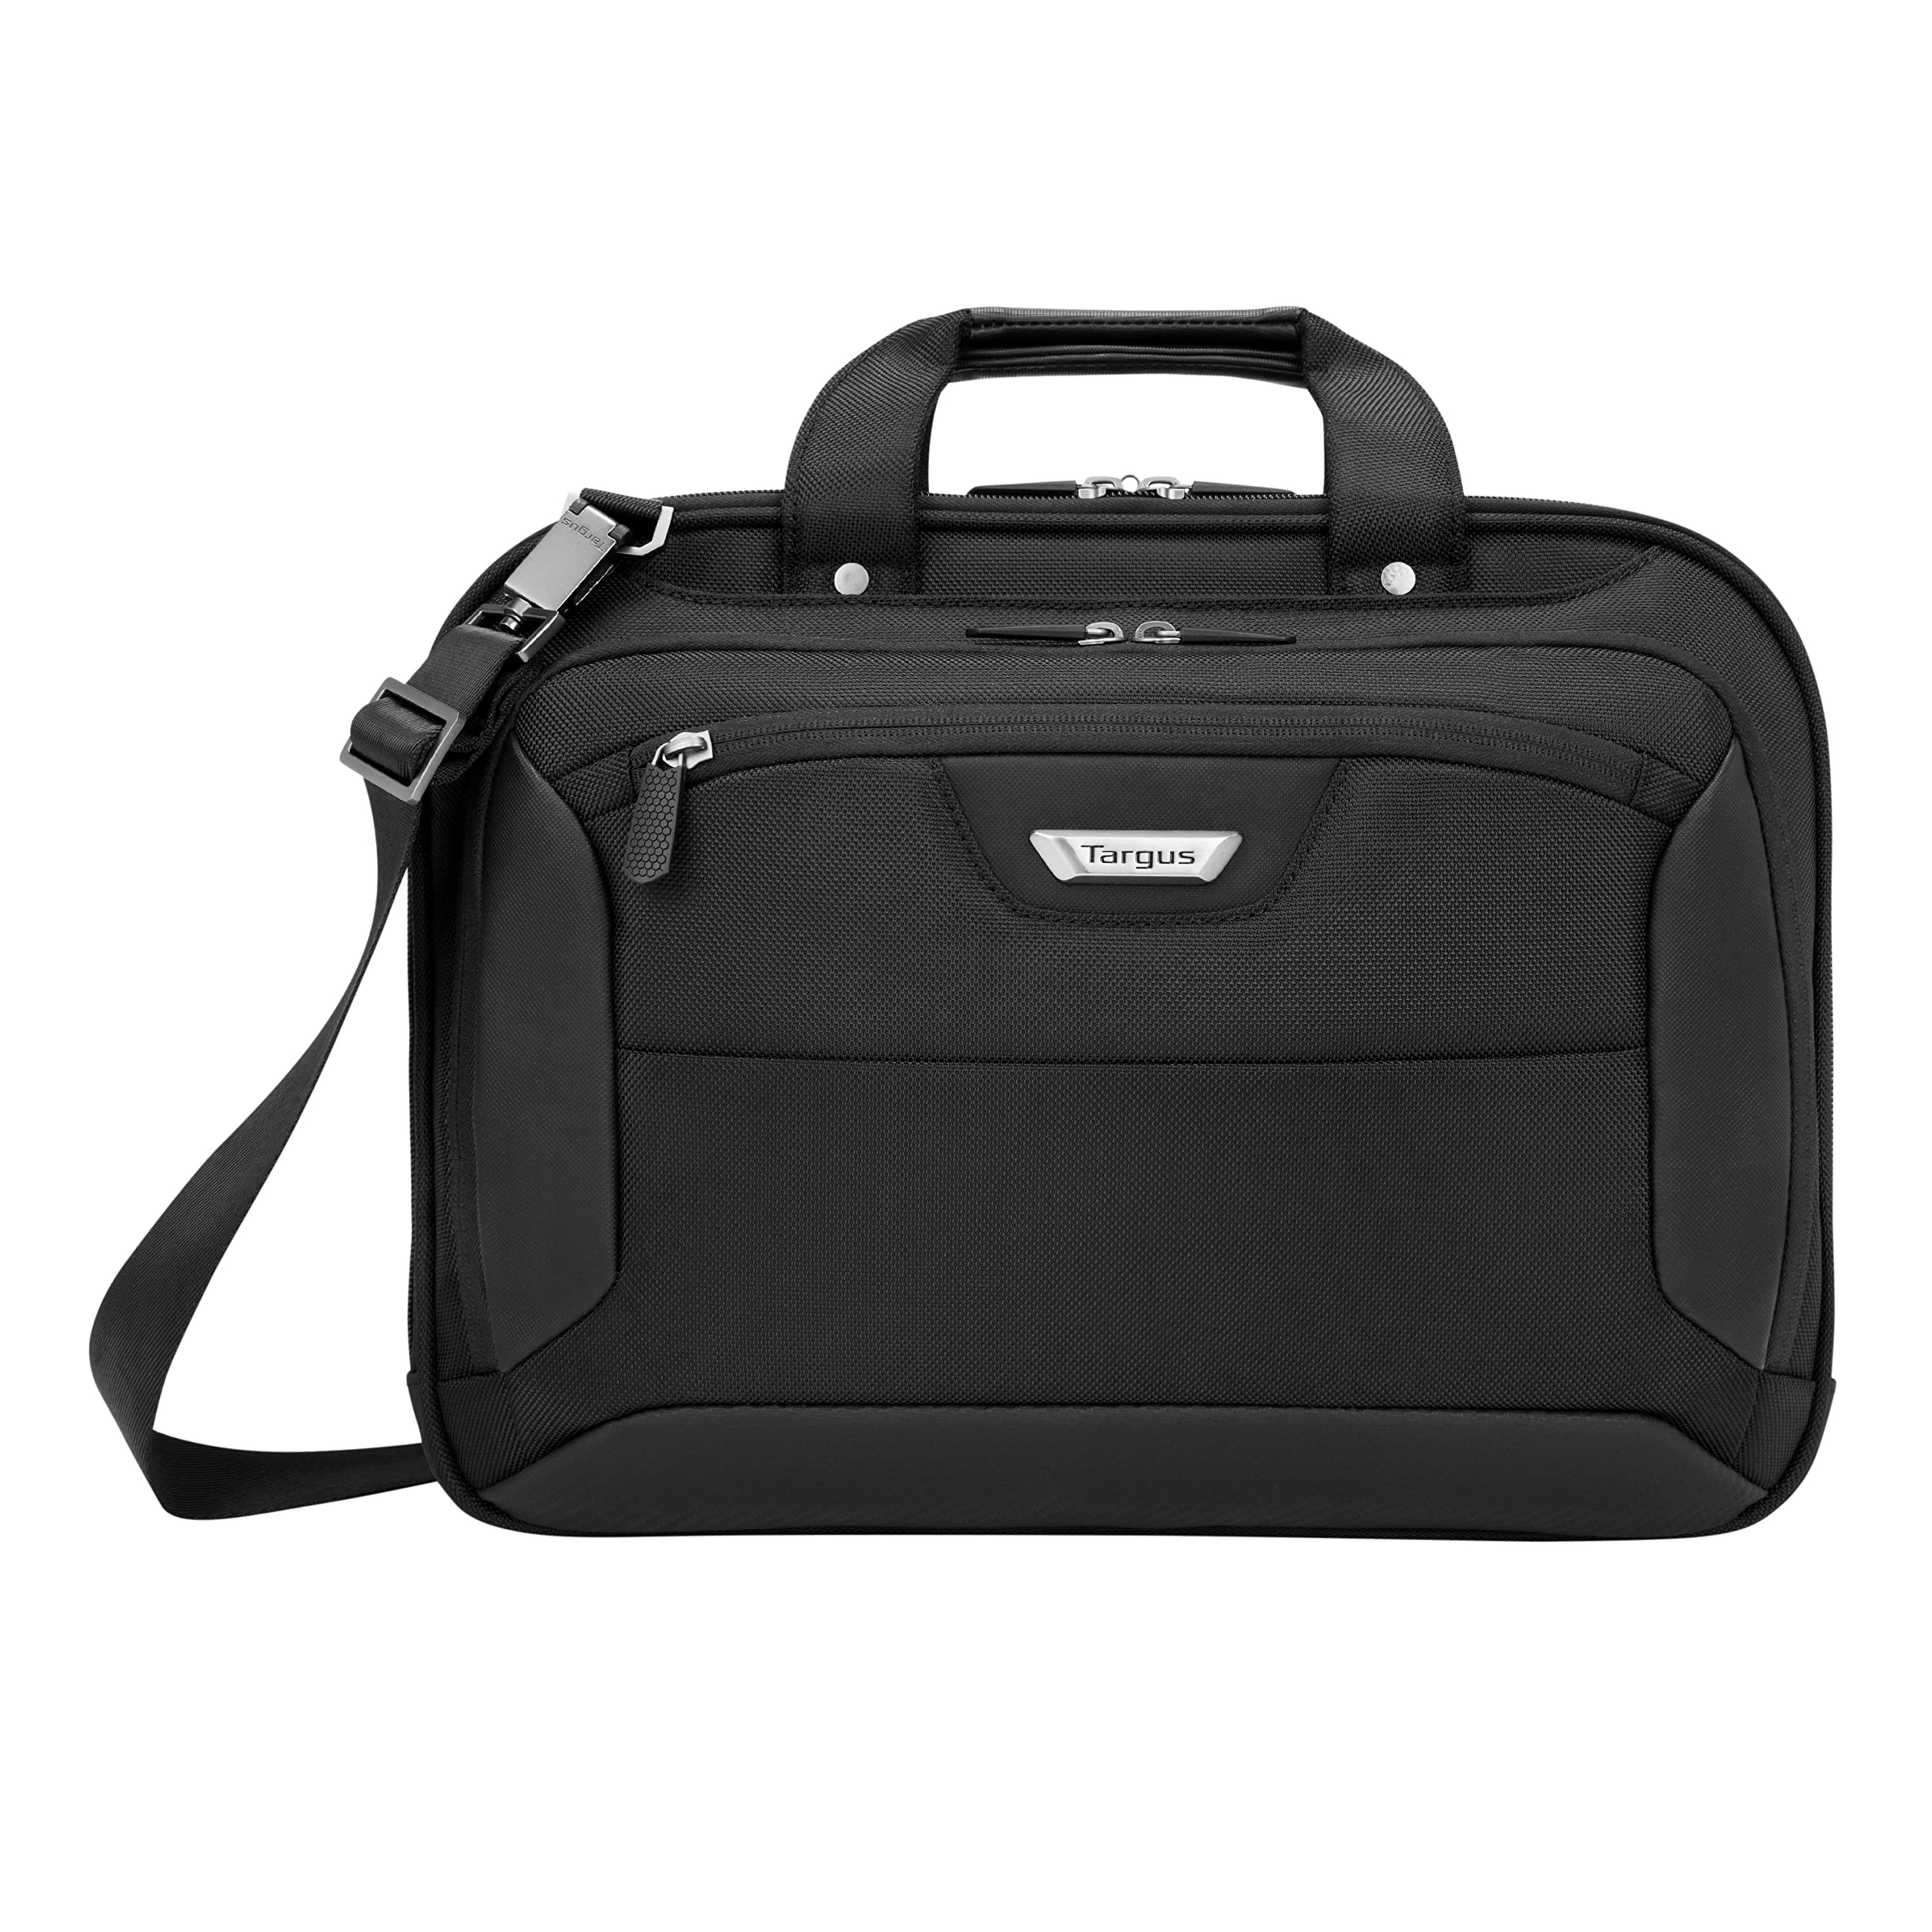 Targus Corporate Traveler Laptop Briefcase Laptop Bag for Men/Women, TSA Security Checkpoint Friendly, Water Resistant Computer Bag for Men/Women, 14-Inch Laptop Case for Men, Black (CUCT02UA14S)